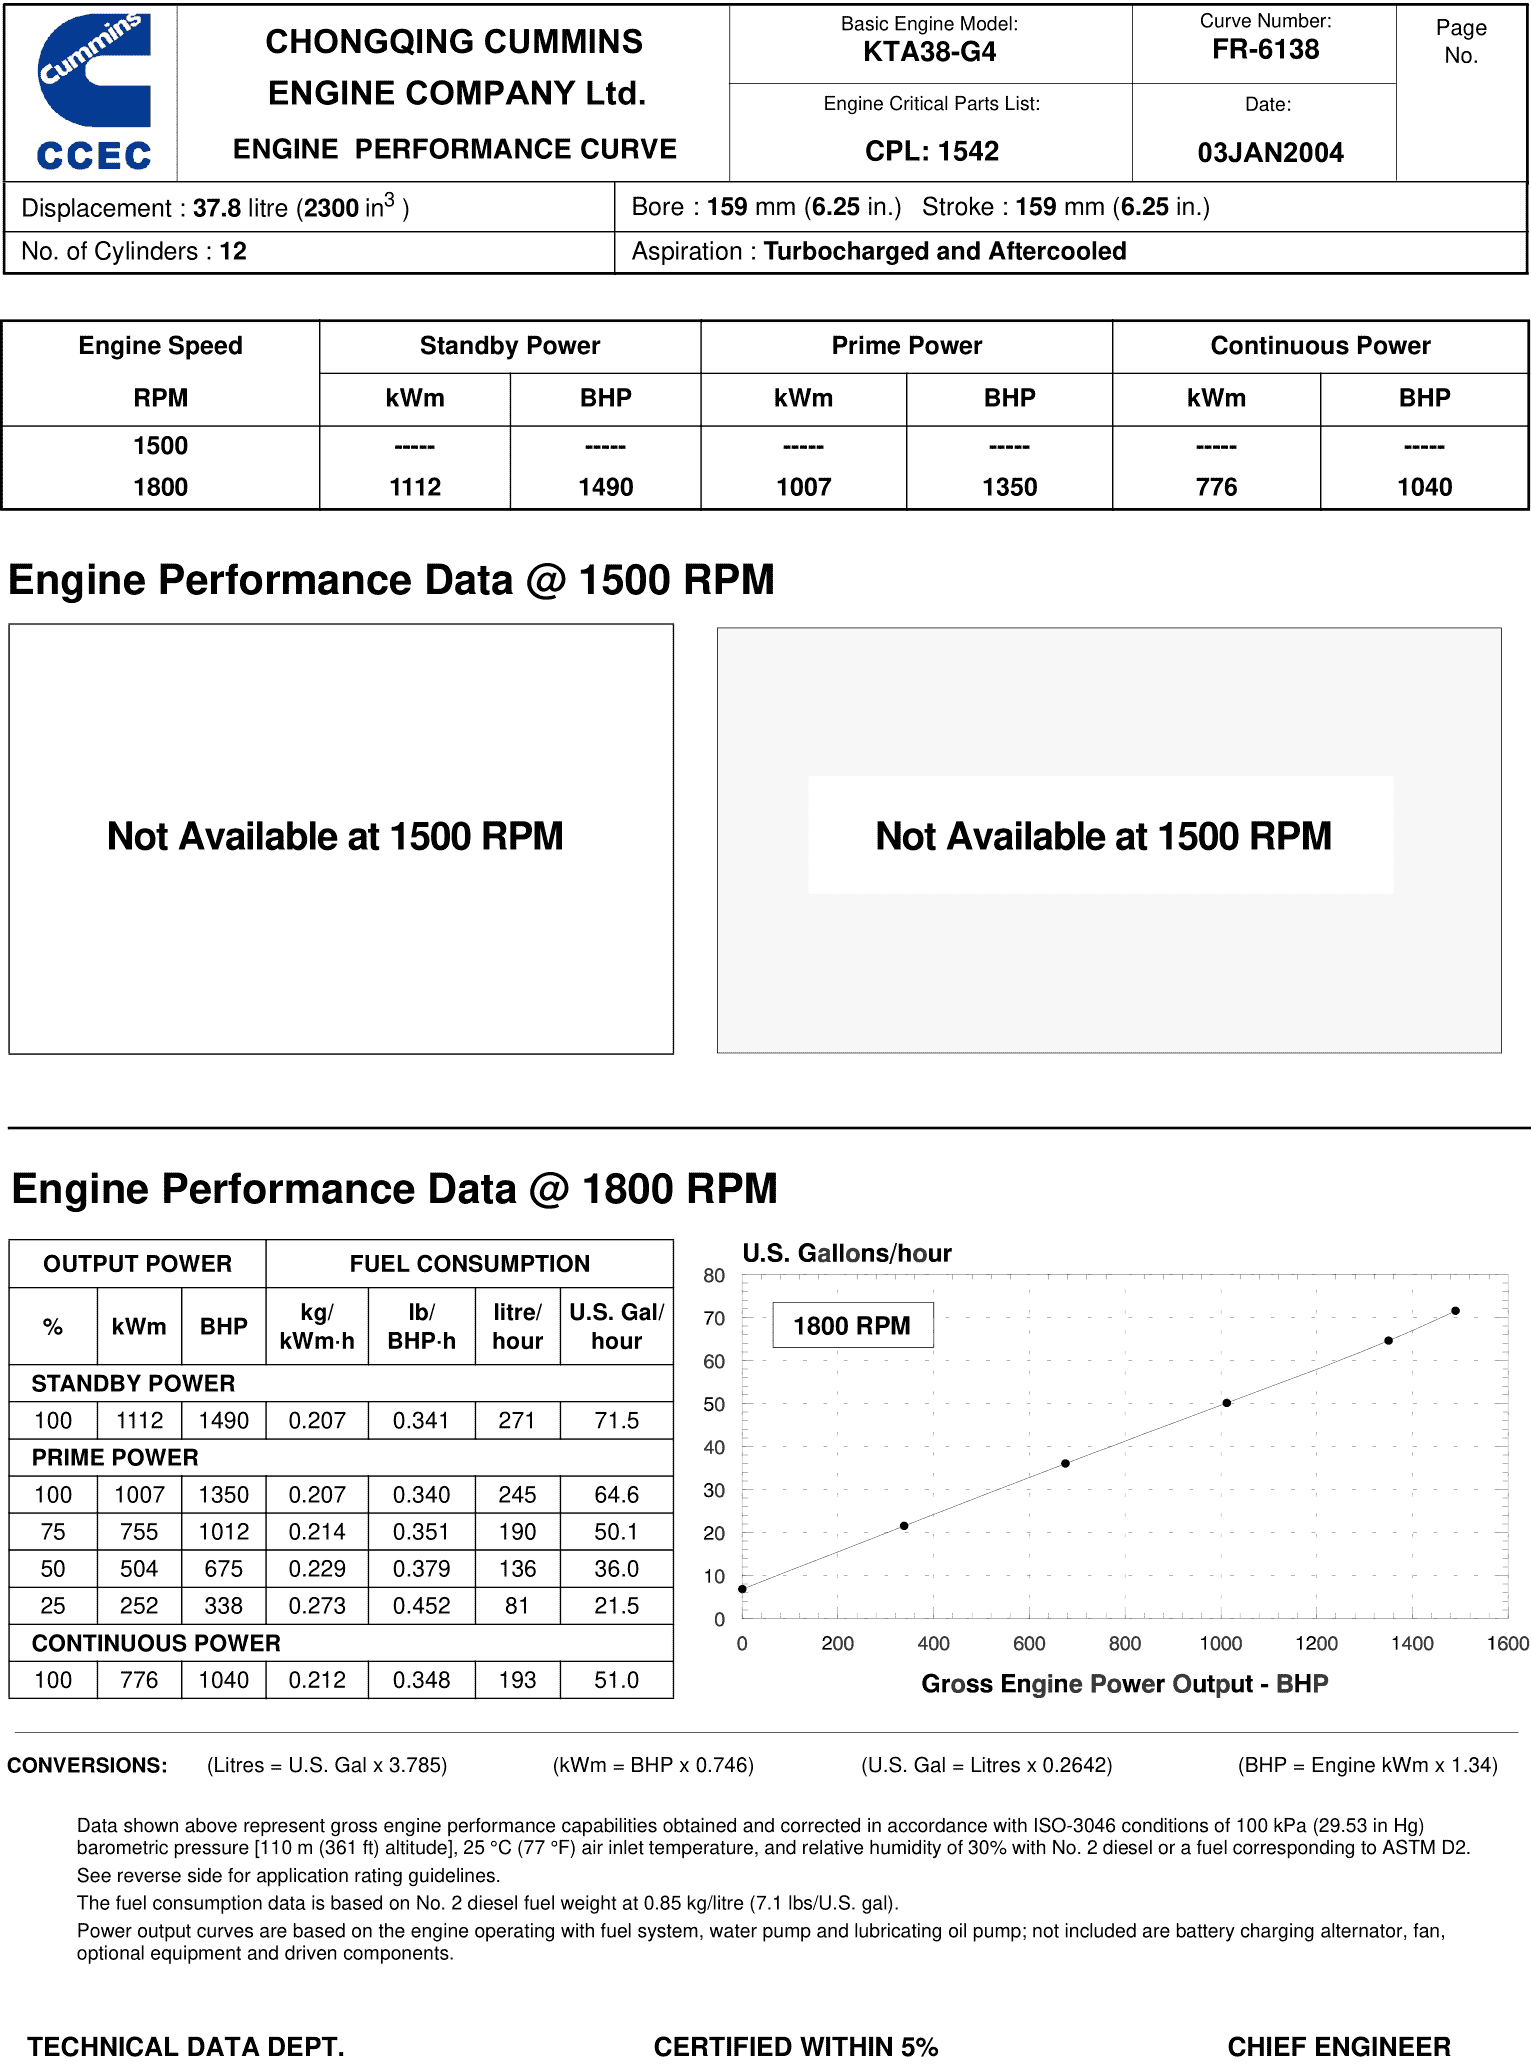 Cummins KTA38-G4 1007kW datasheet